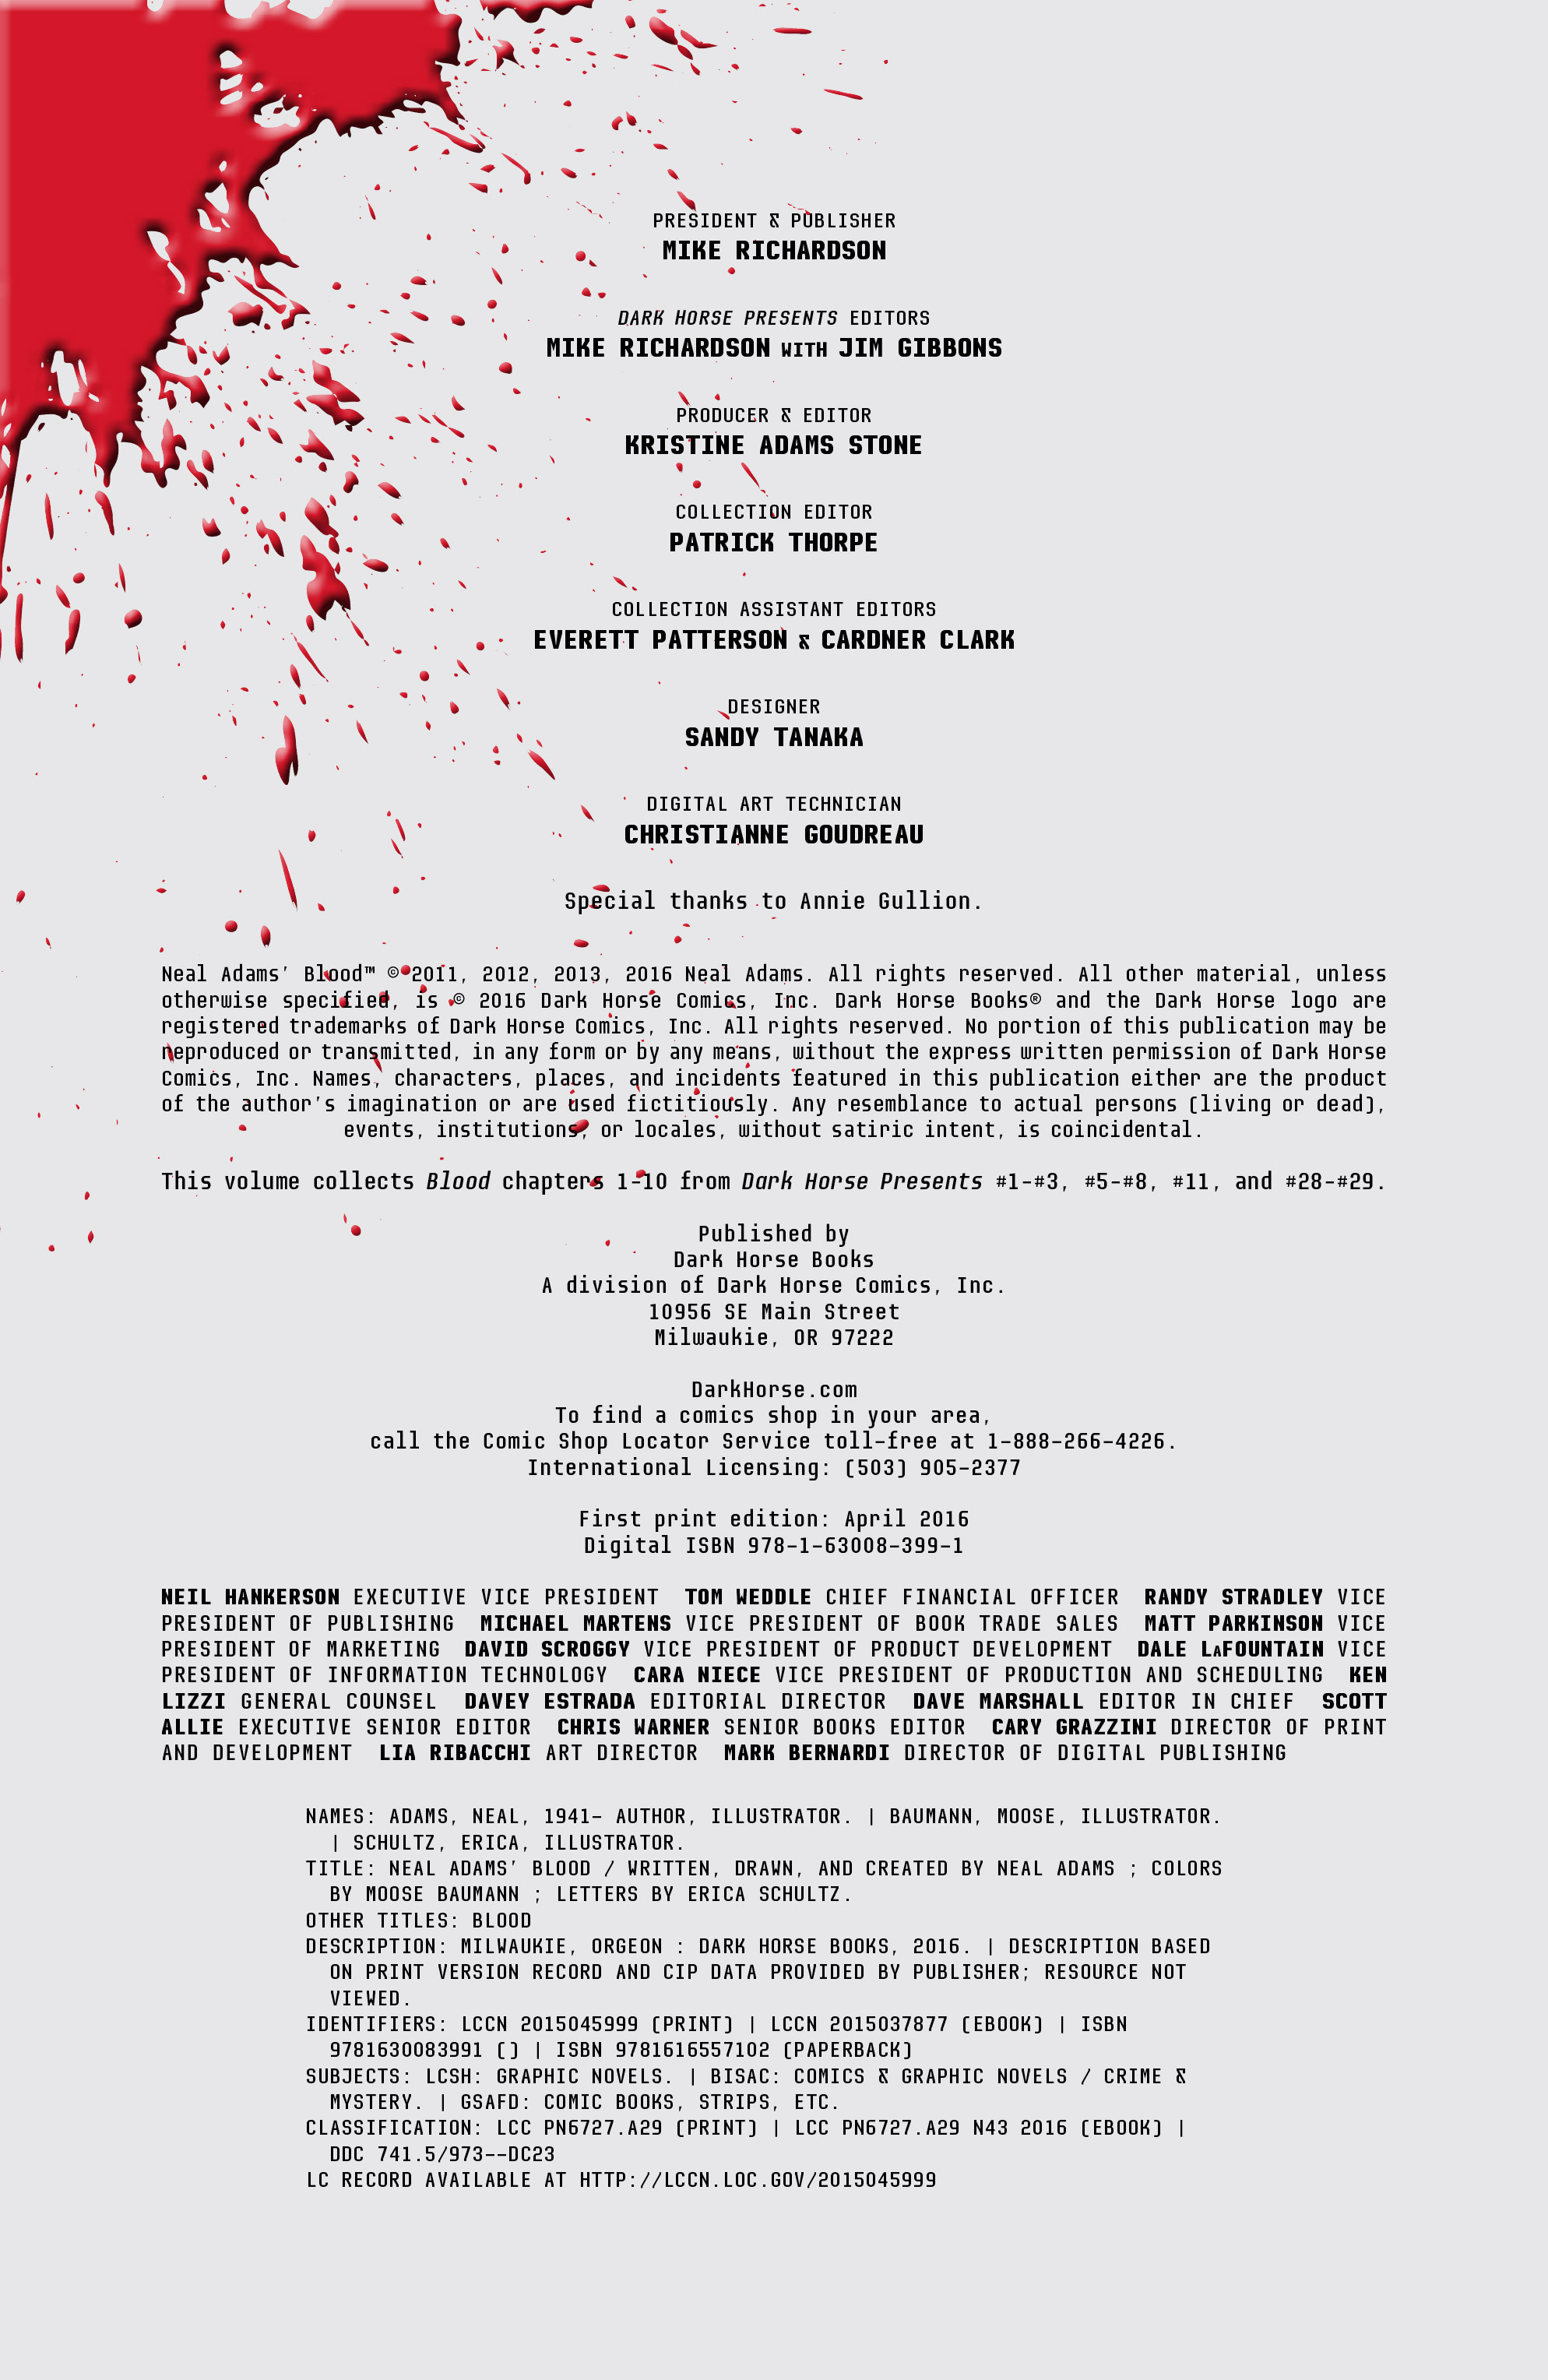 Read online Neal Adams' Blood comic -  Issue # TPB - 5